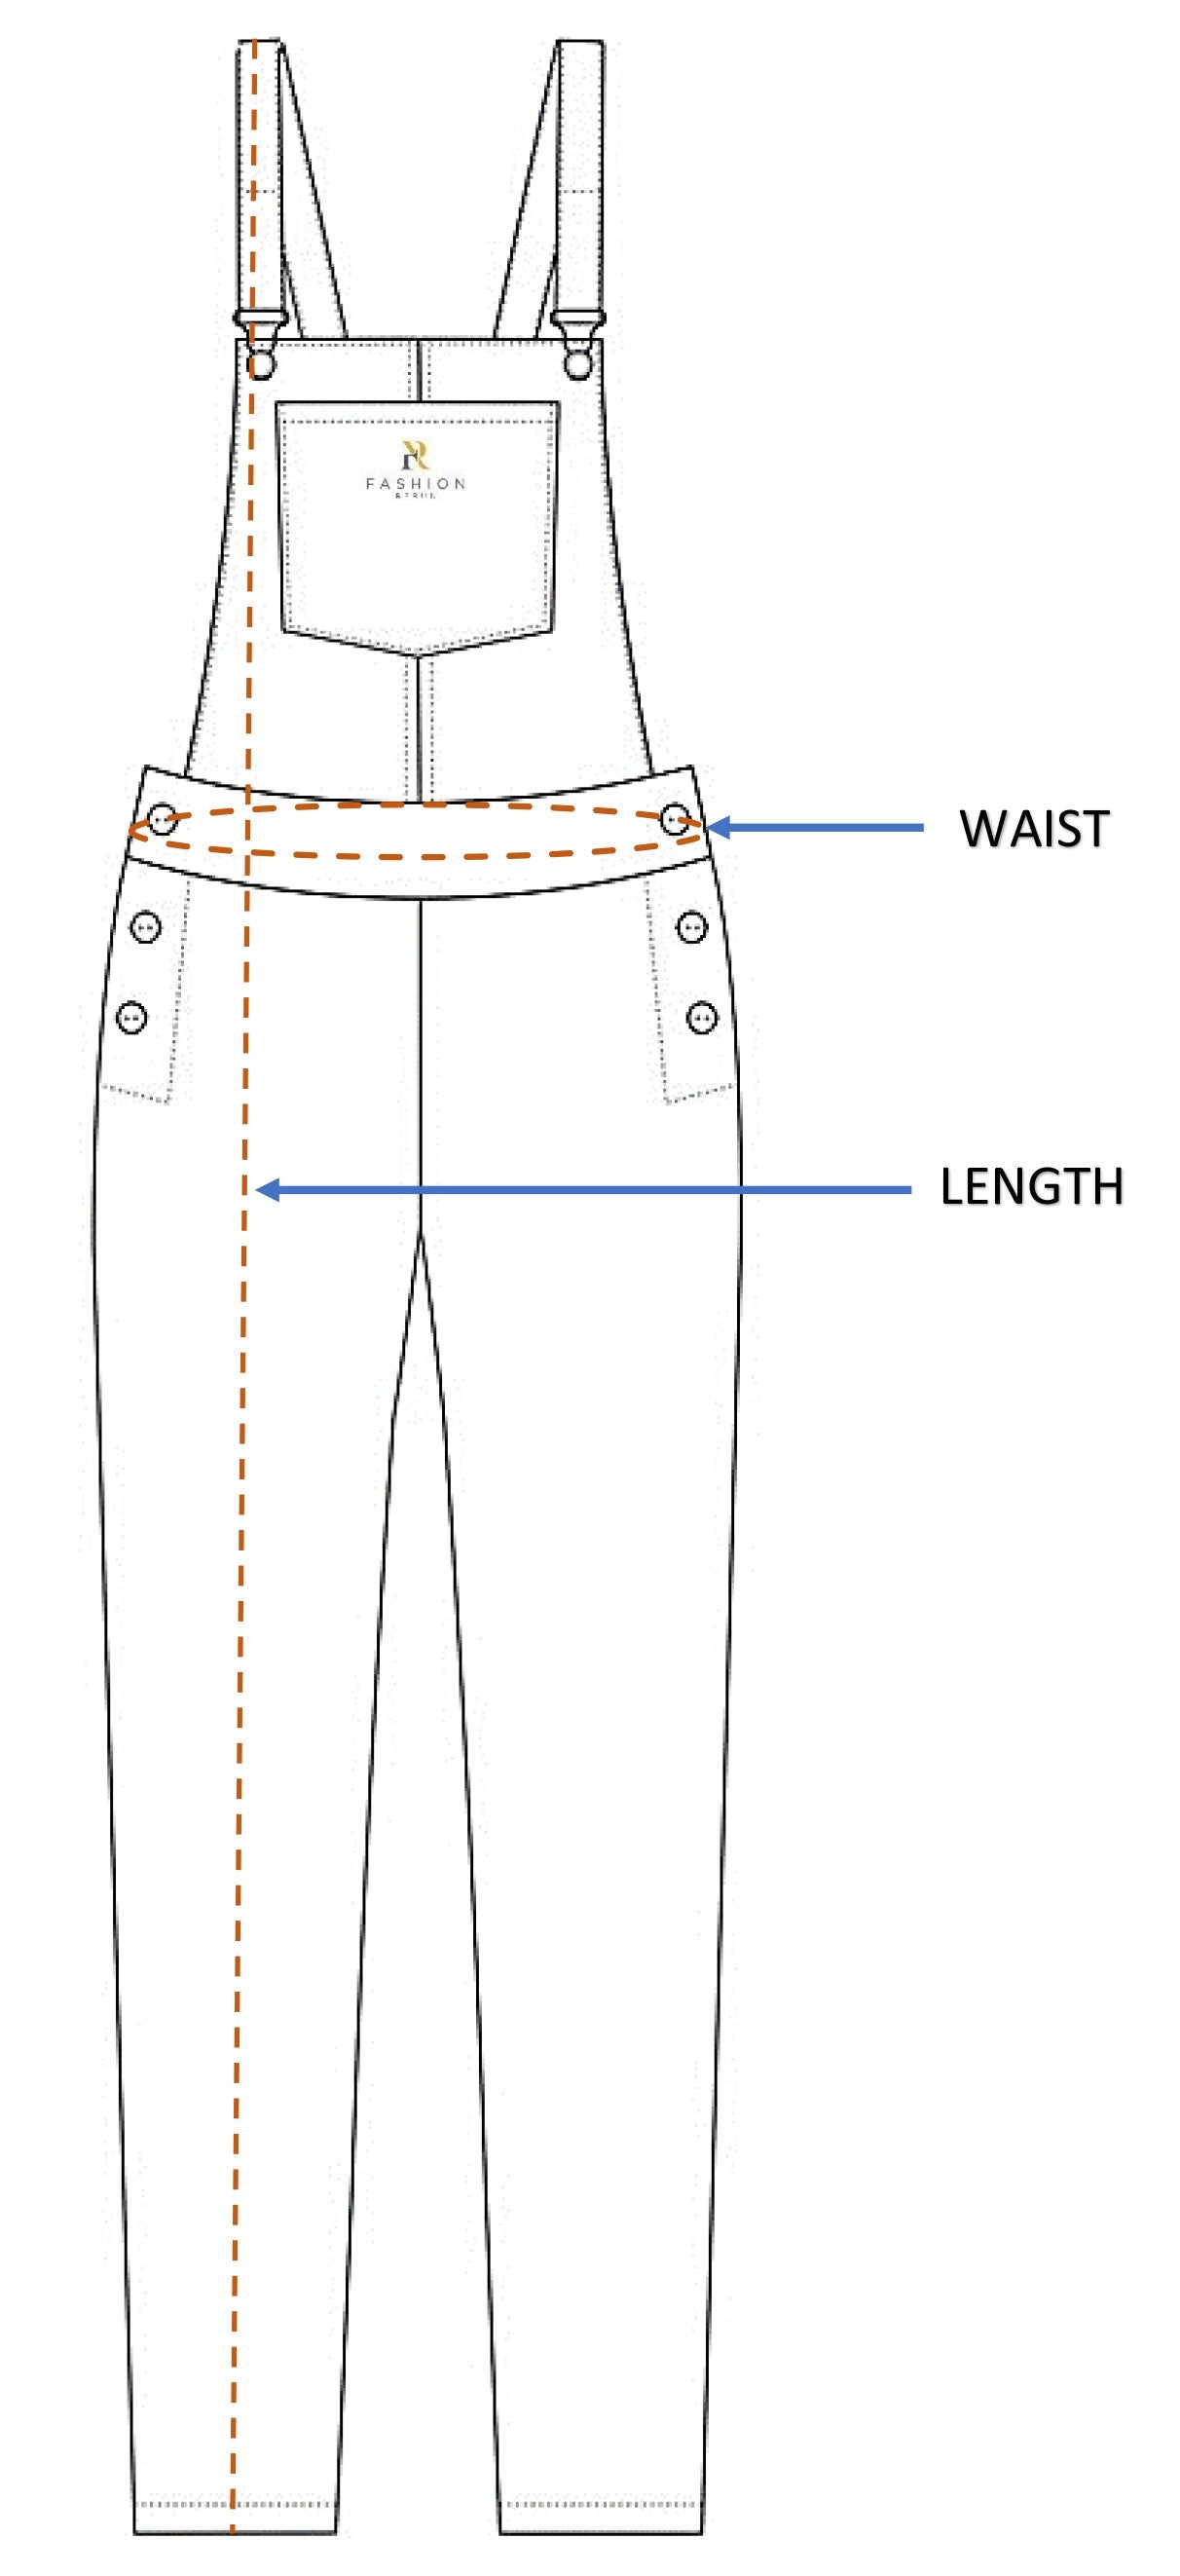 Measurement Image 6